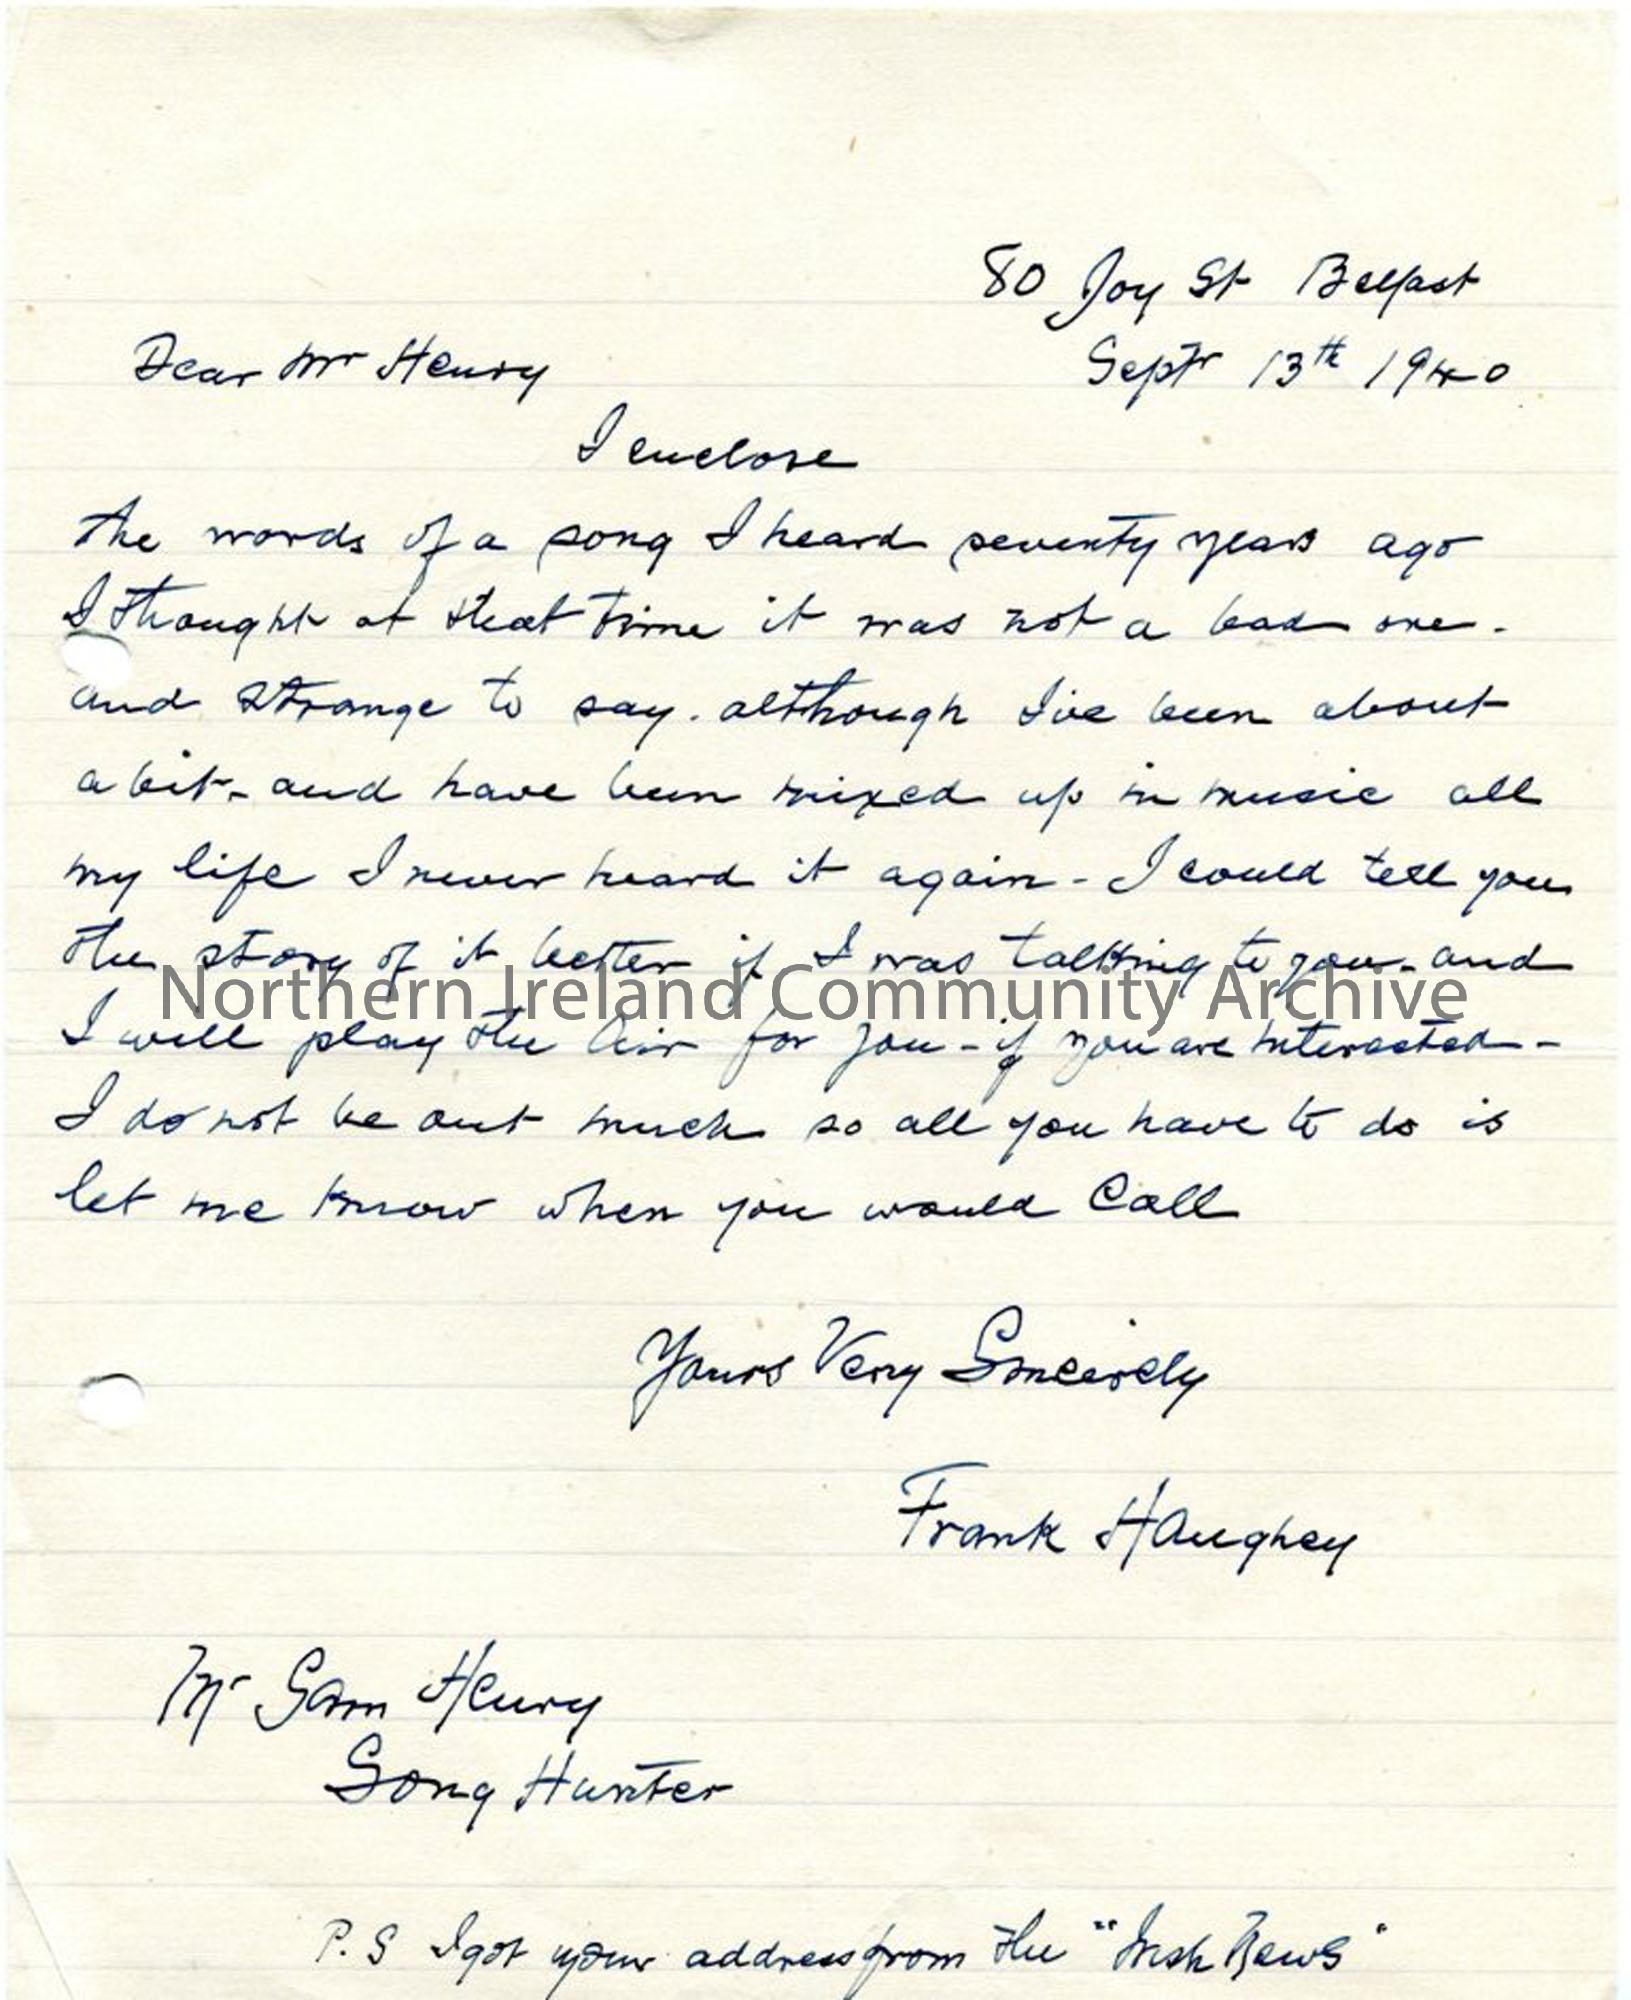 Letter to Sam Henry from Frank Haughey, 13th September 1940